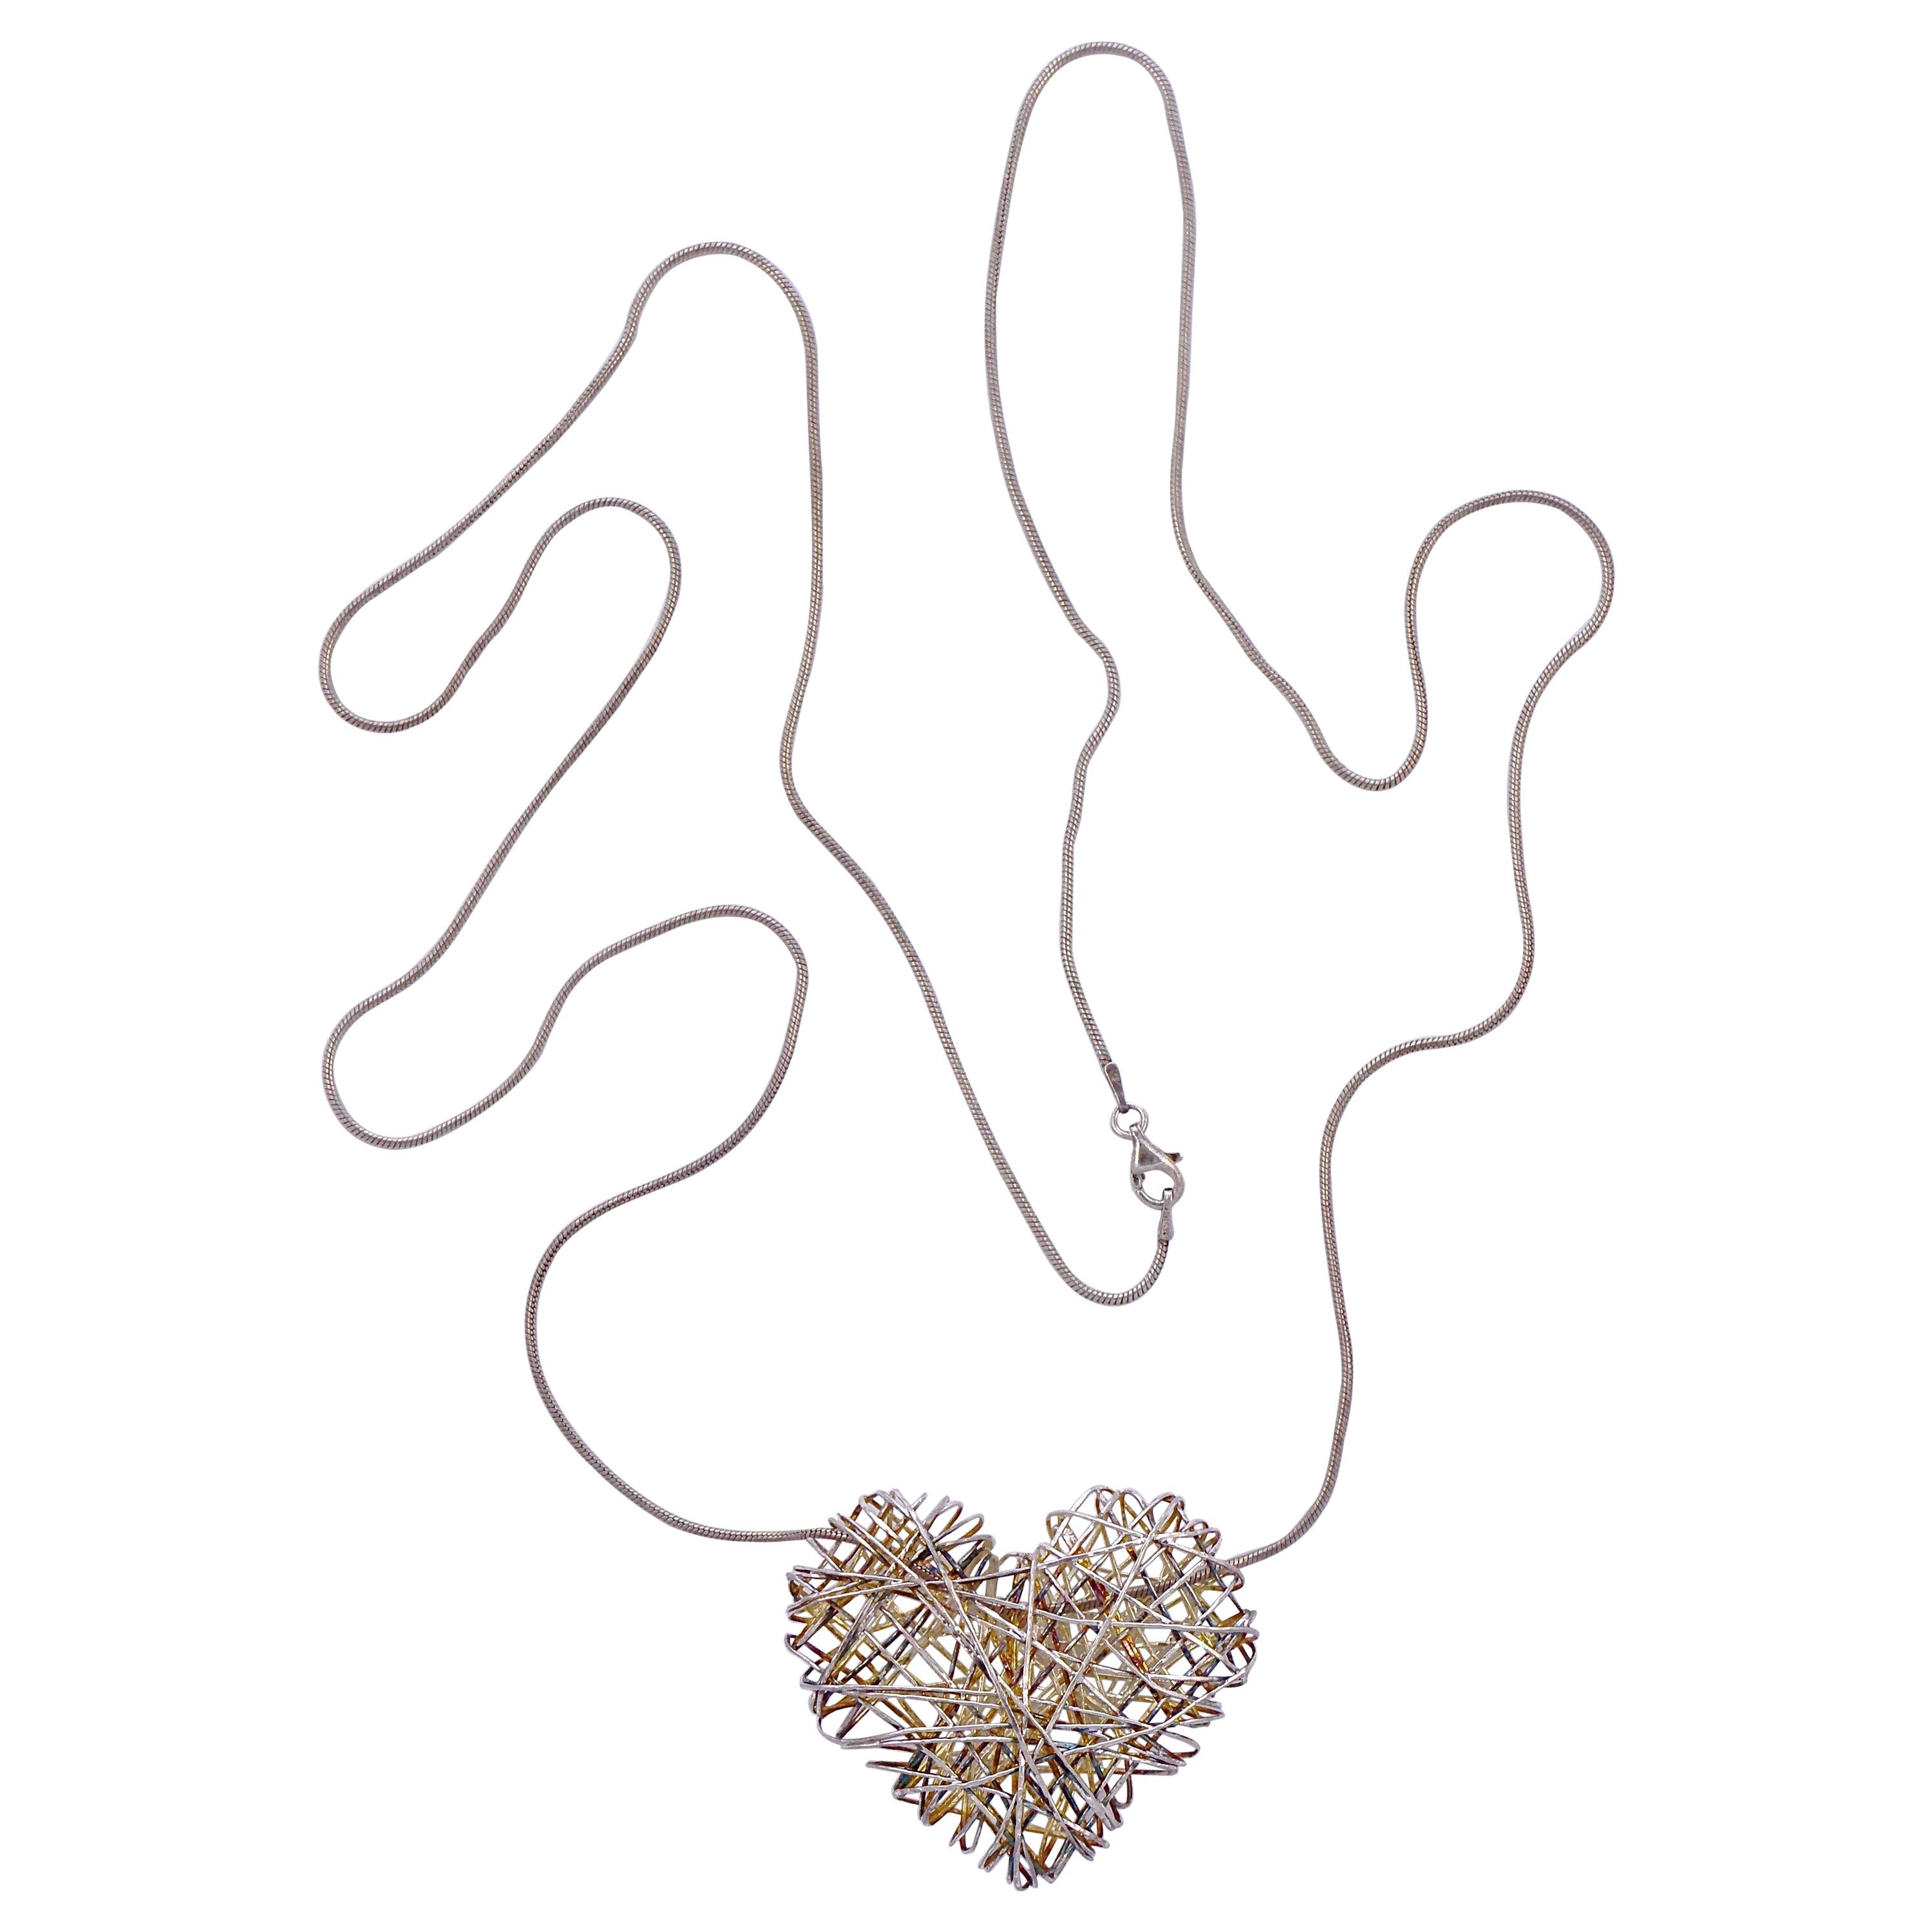 Long Italian Silver Snake Chain and Woven Heart Pendant Necklace circa 1990s